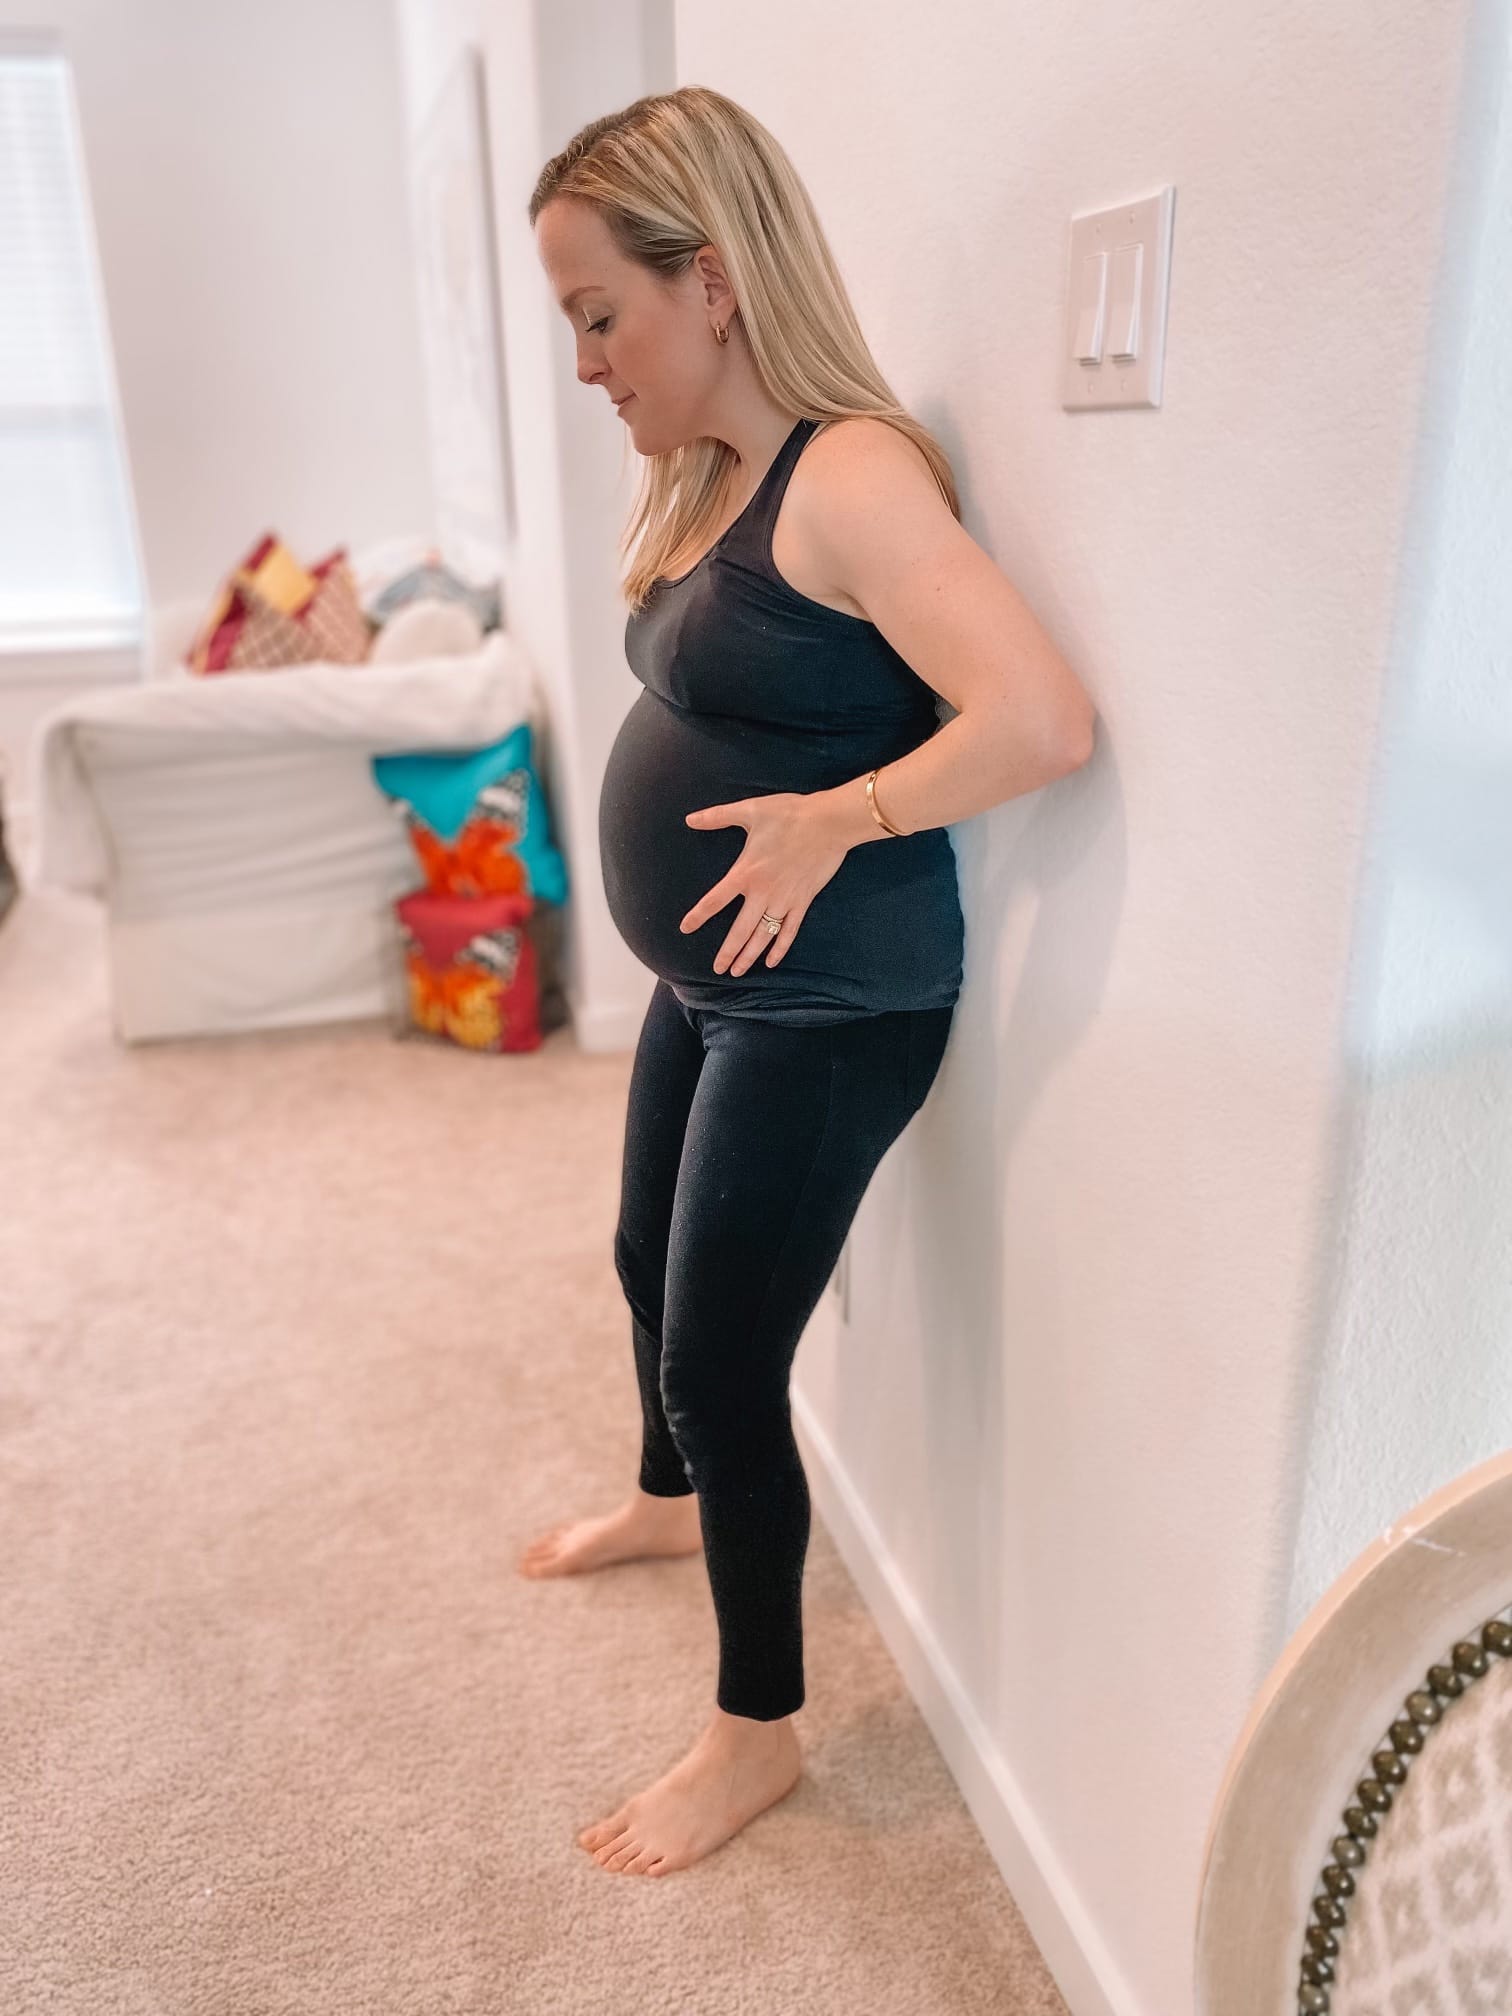 Pregnant woman doing a pelvic tilt against the wall.